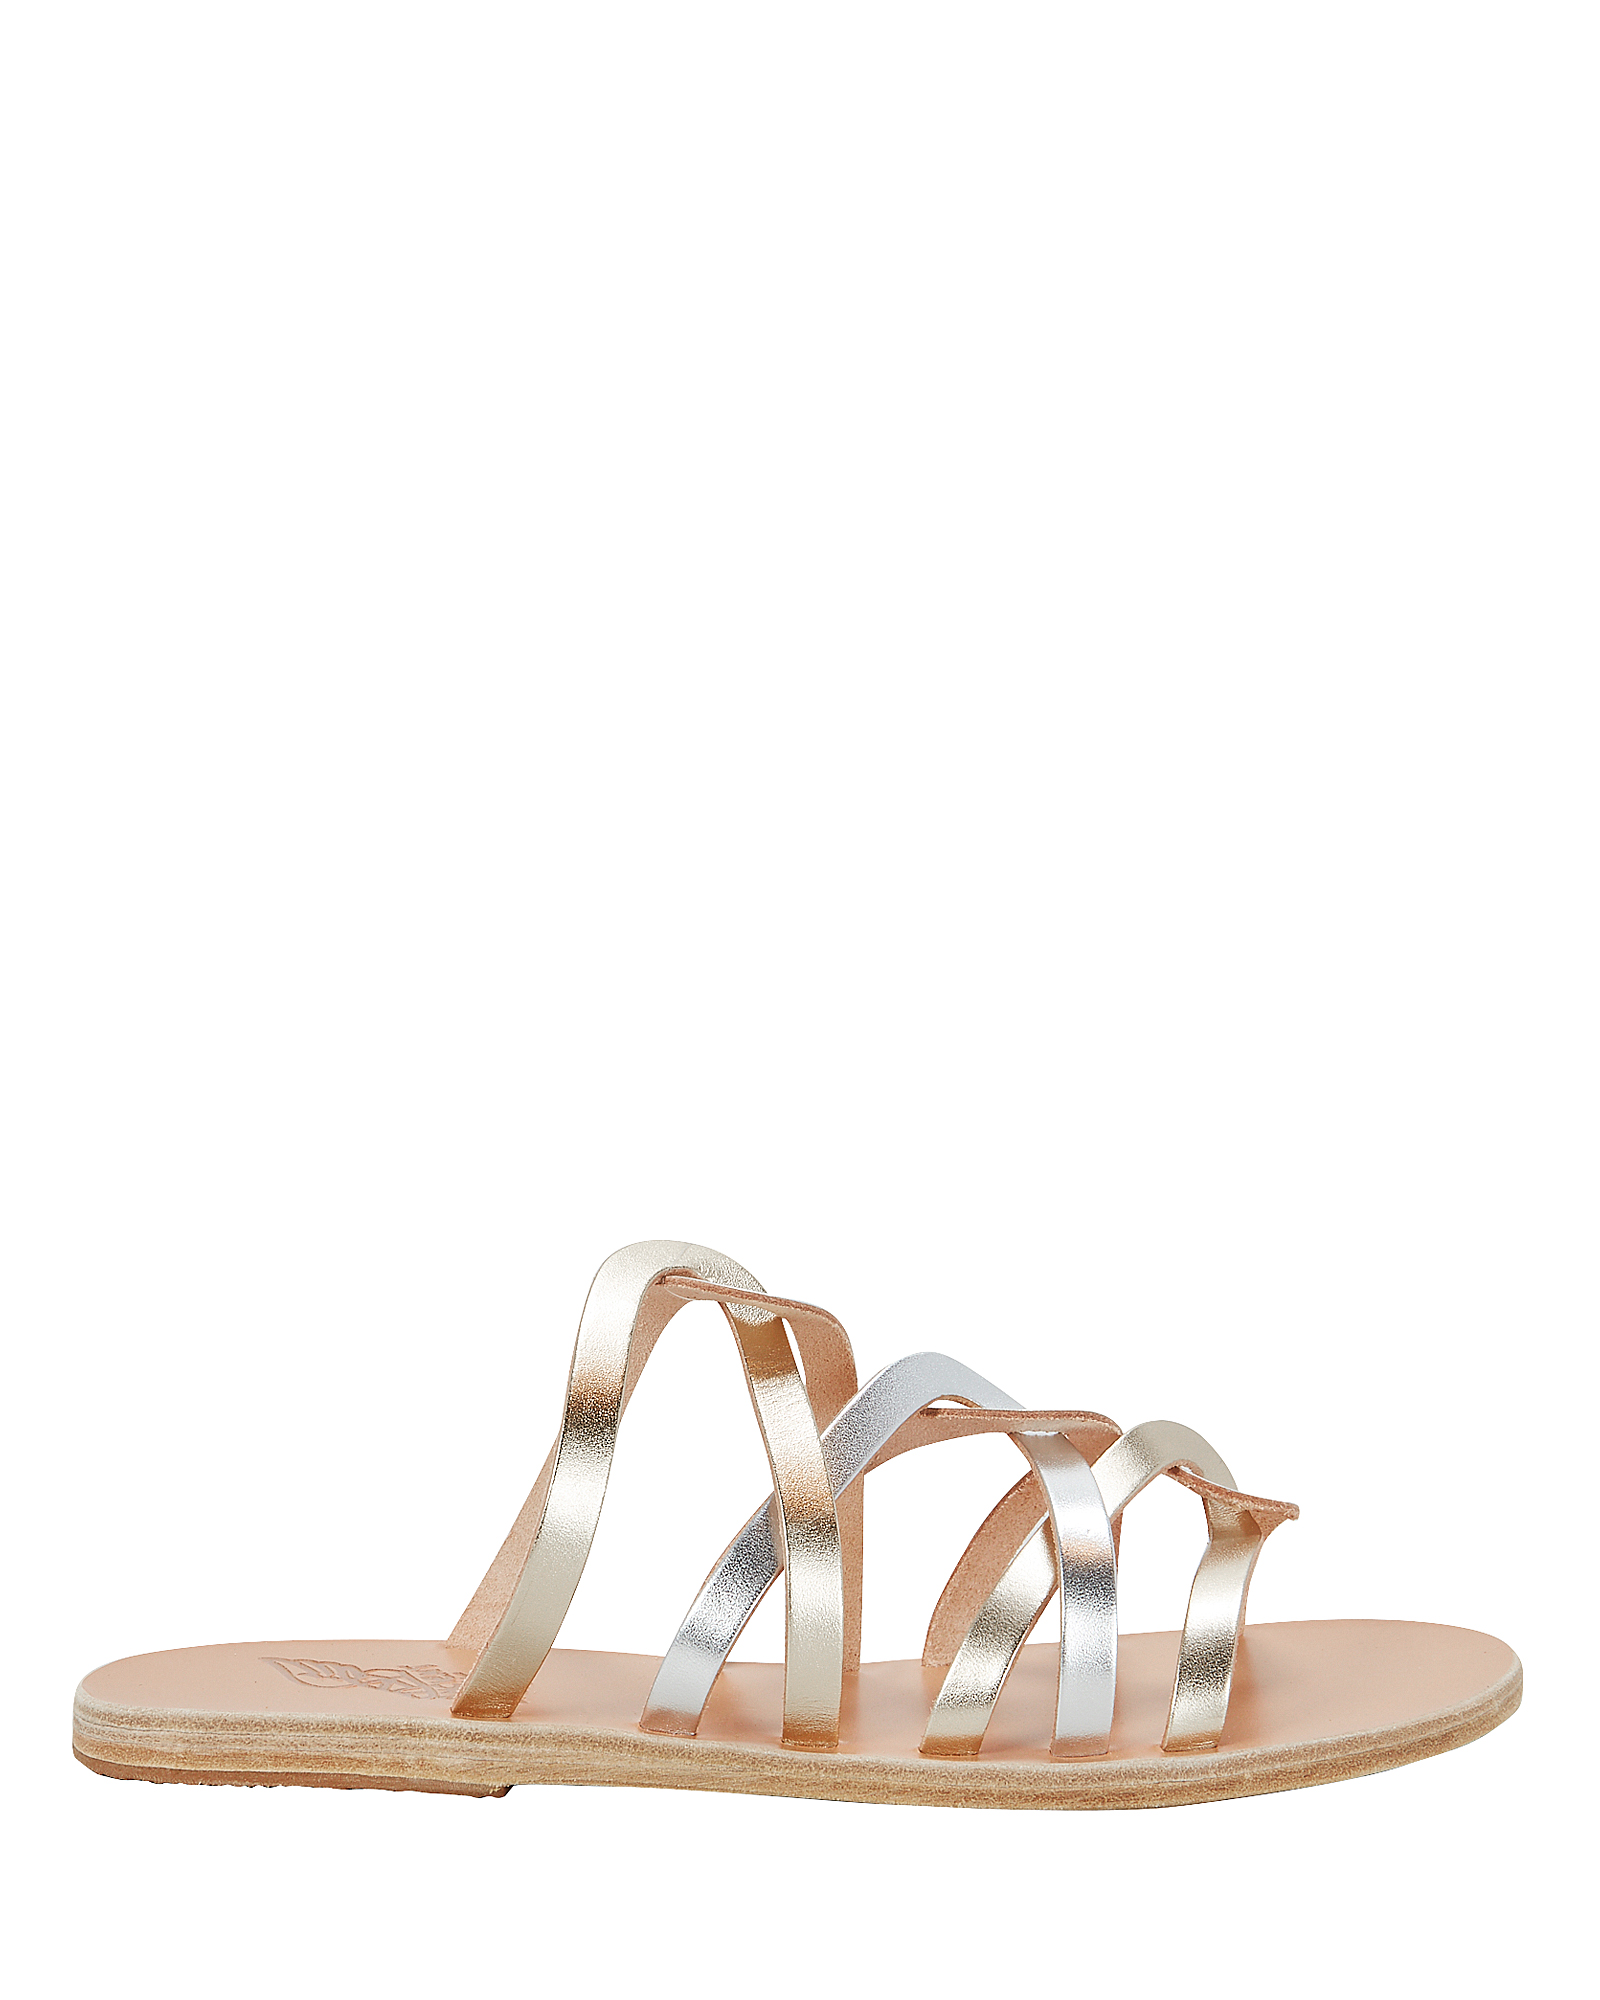 Donousa Silver Slide Sandals | INTERMIX®